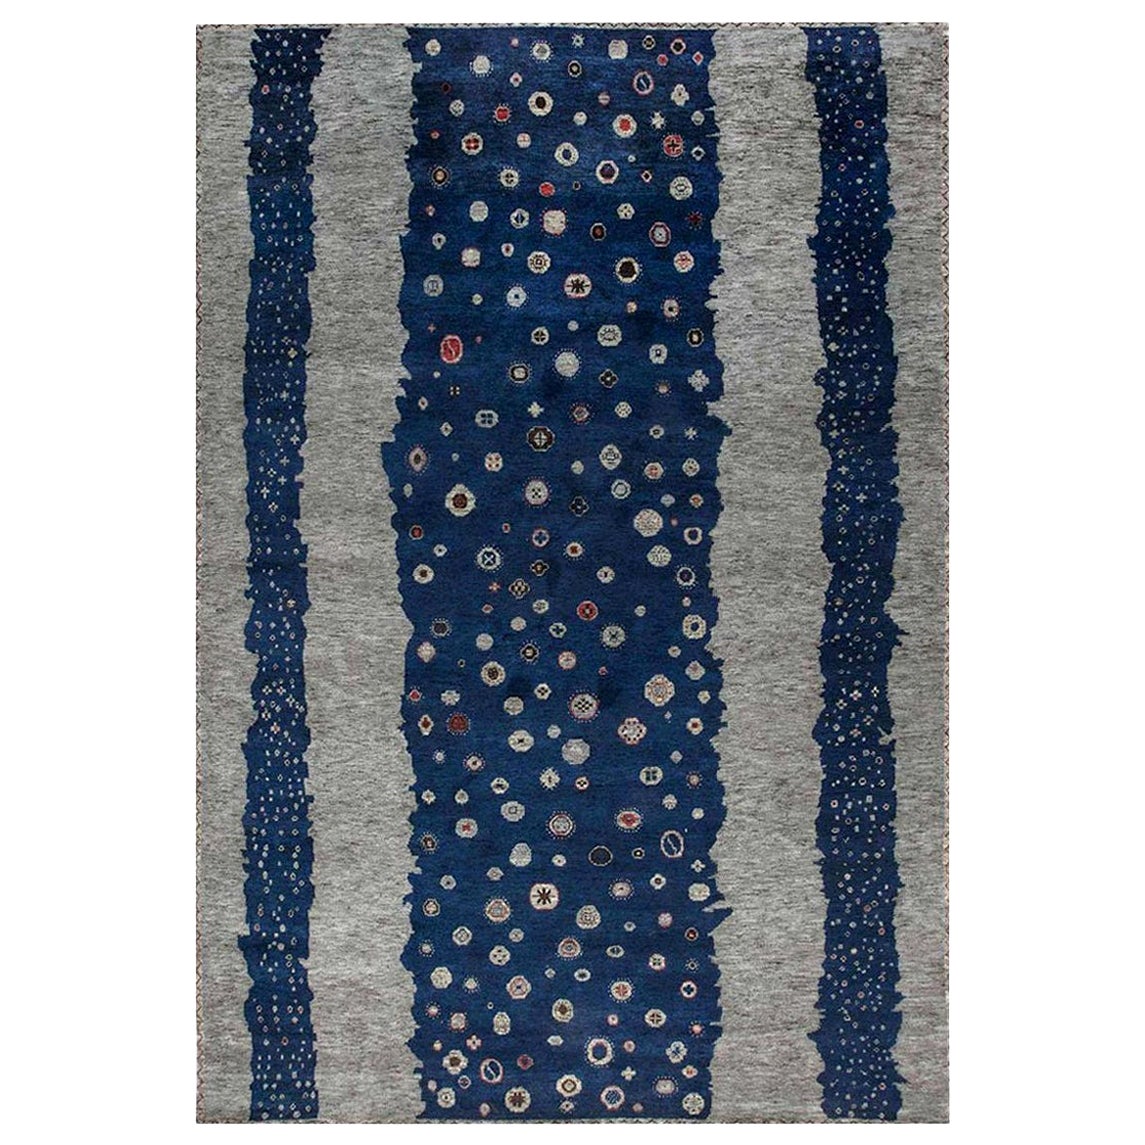 Contemporary Flen Swedish Inspired Blue, Gray Wool Pile by Doris Leslie Blau For Sale